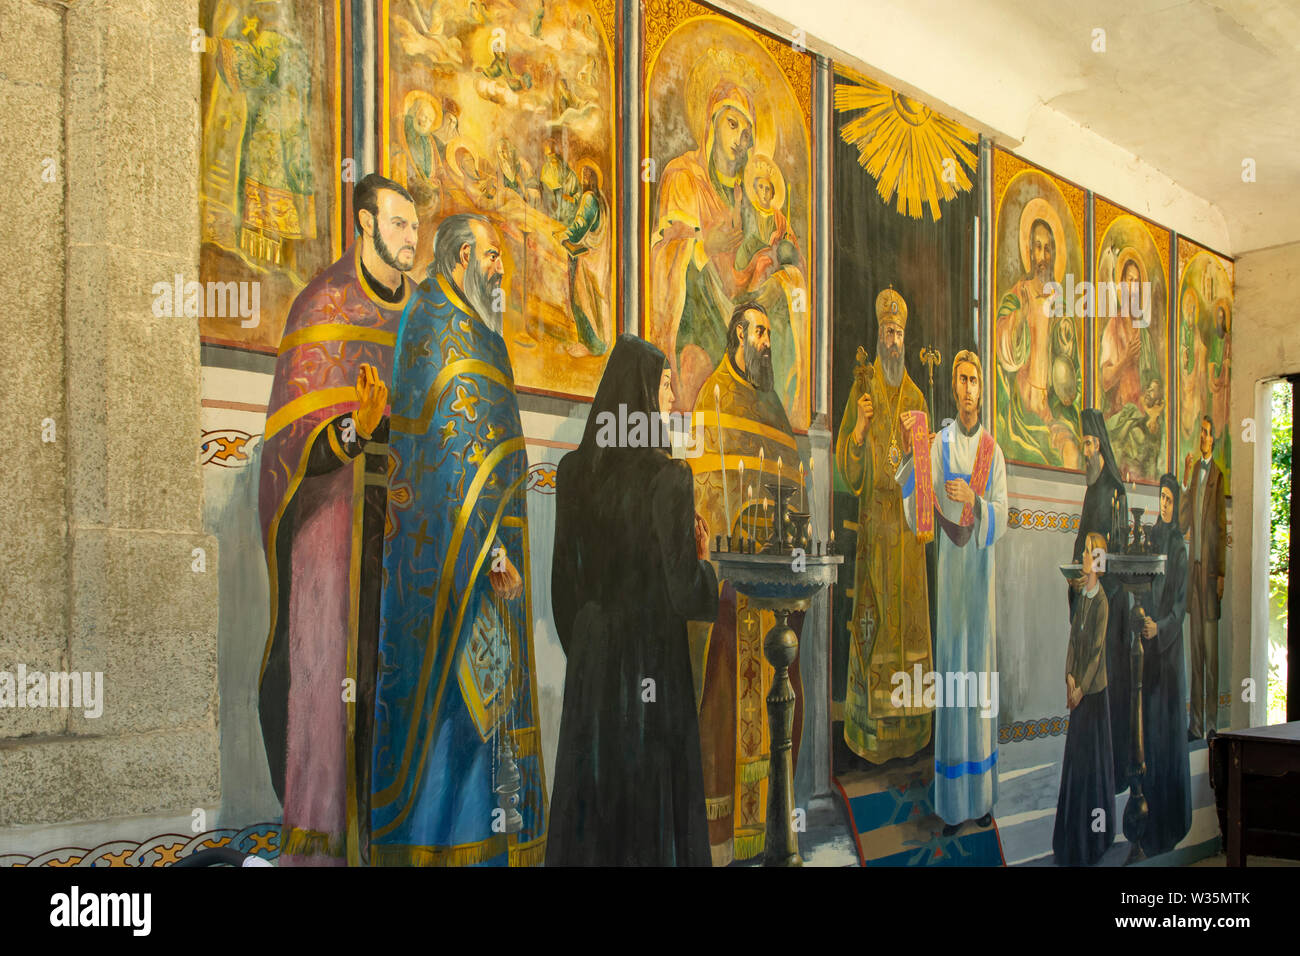 Photo murale sur l'Eglise Orthodoxe Orientale, Karlovo, Bulgarie Banque D'Images